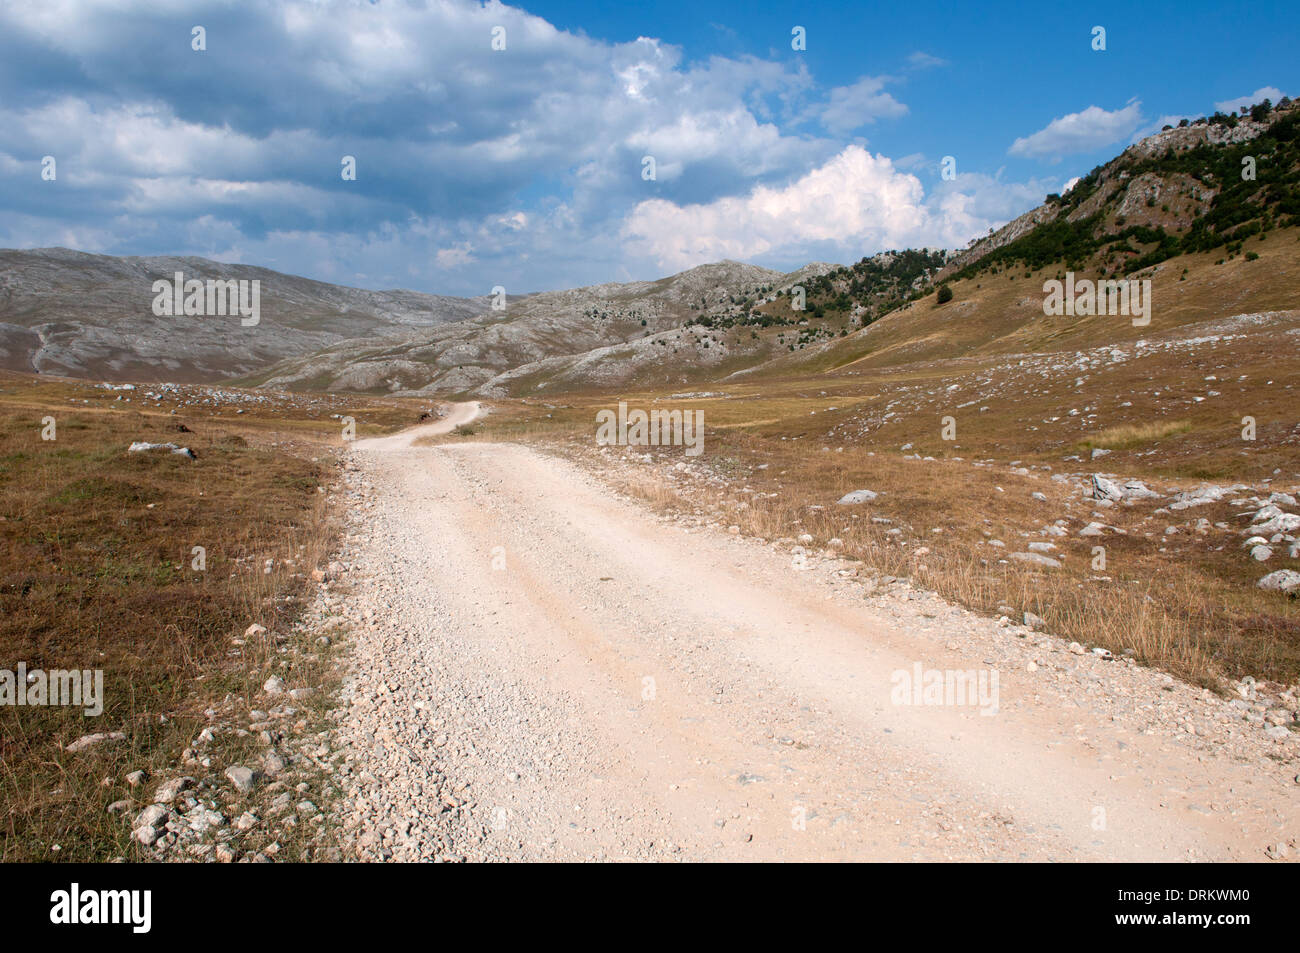 Strada sporca per il villaggio di Lukomir, Bjelašnica area montana, Bosnia-Erzegovina Foto Stock